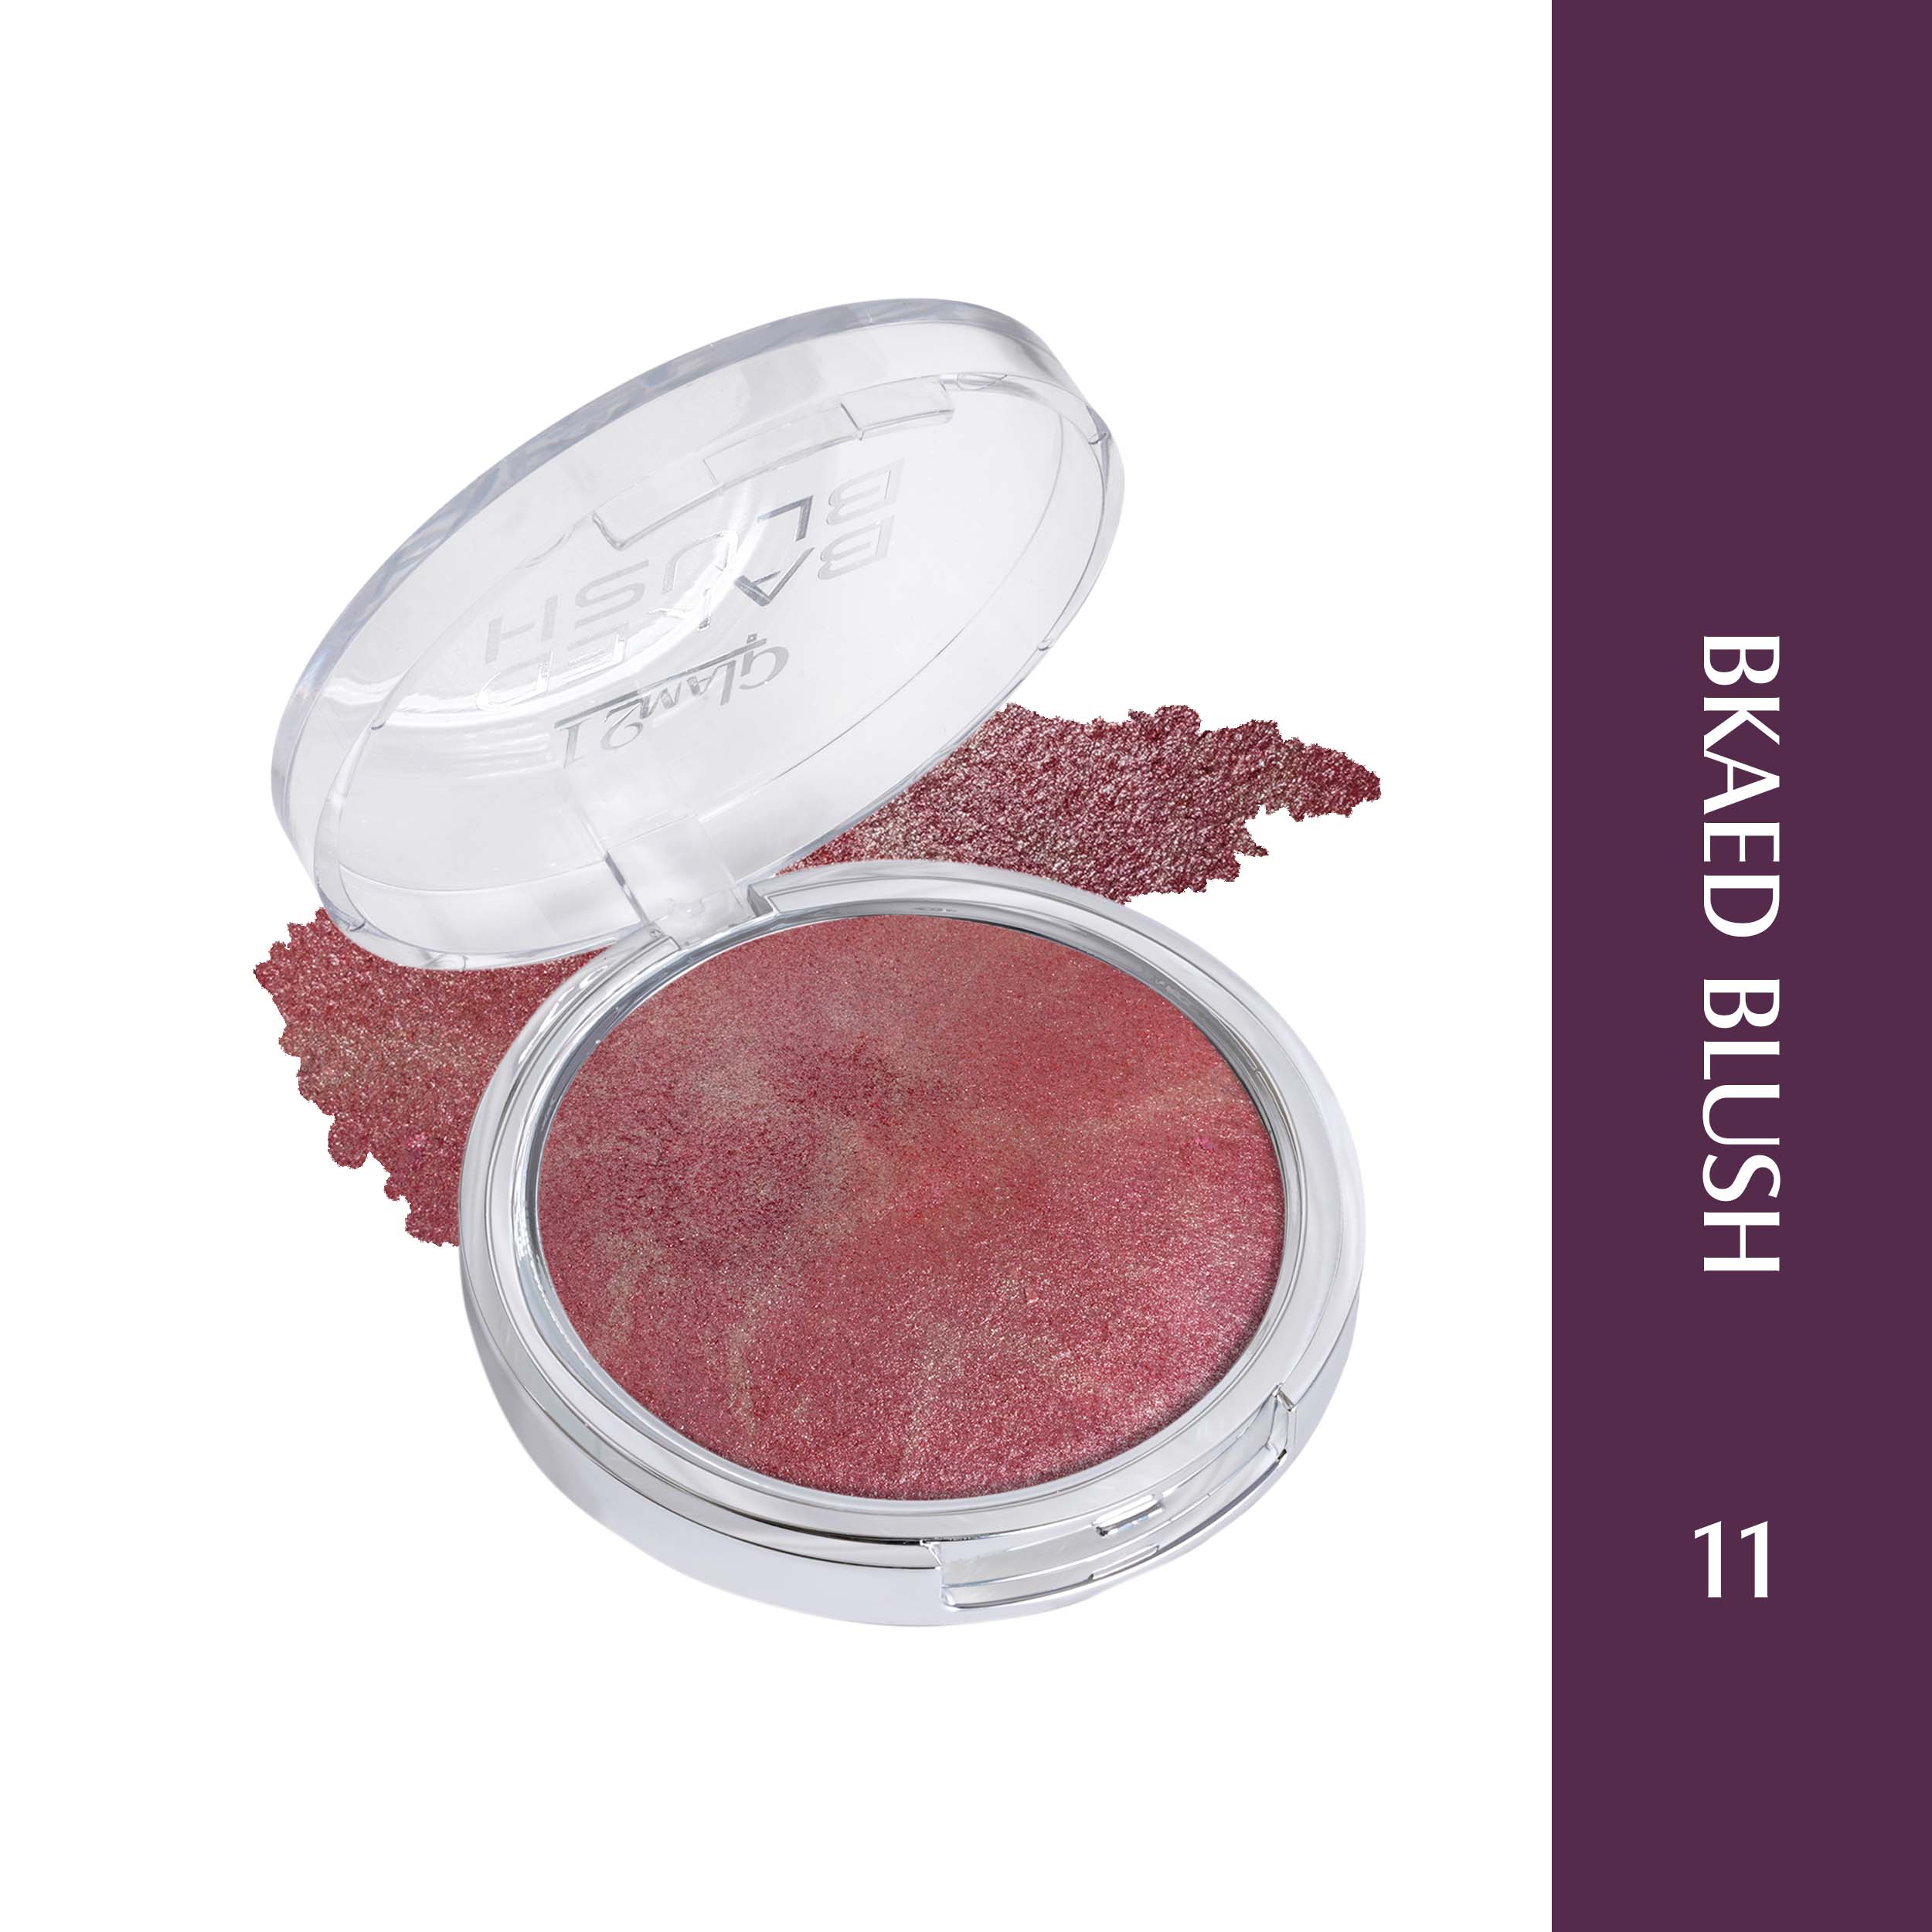 Glam21 Baked Blush Highly Pigmented Formula, Long-Lasting, Illuminating Texture, 6g (Shade-11)